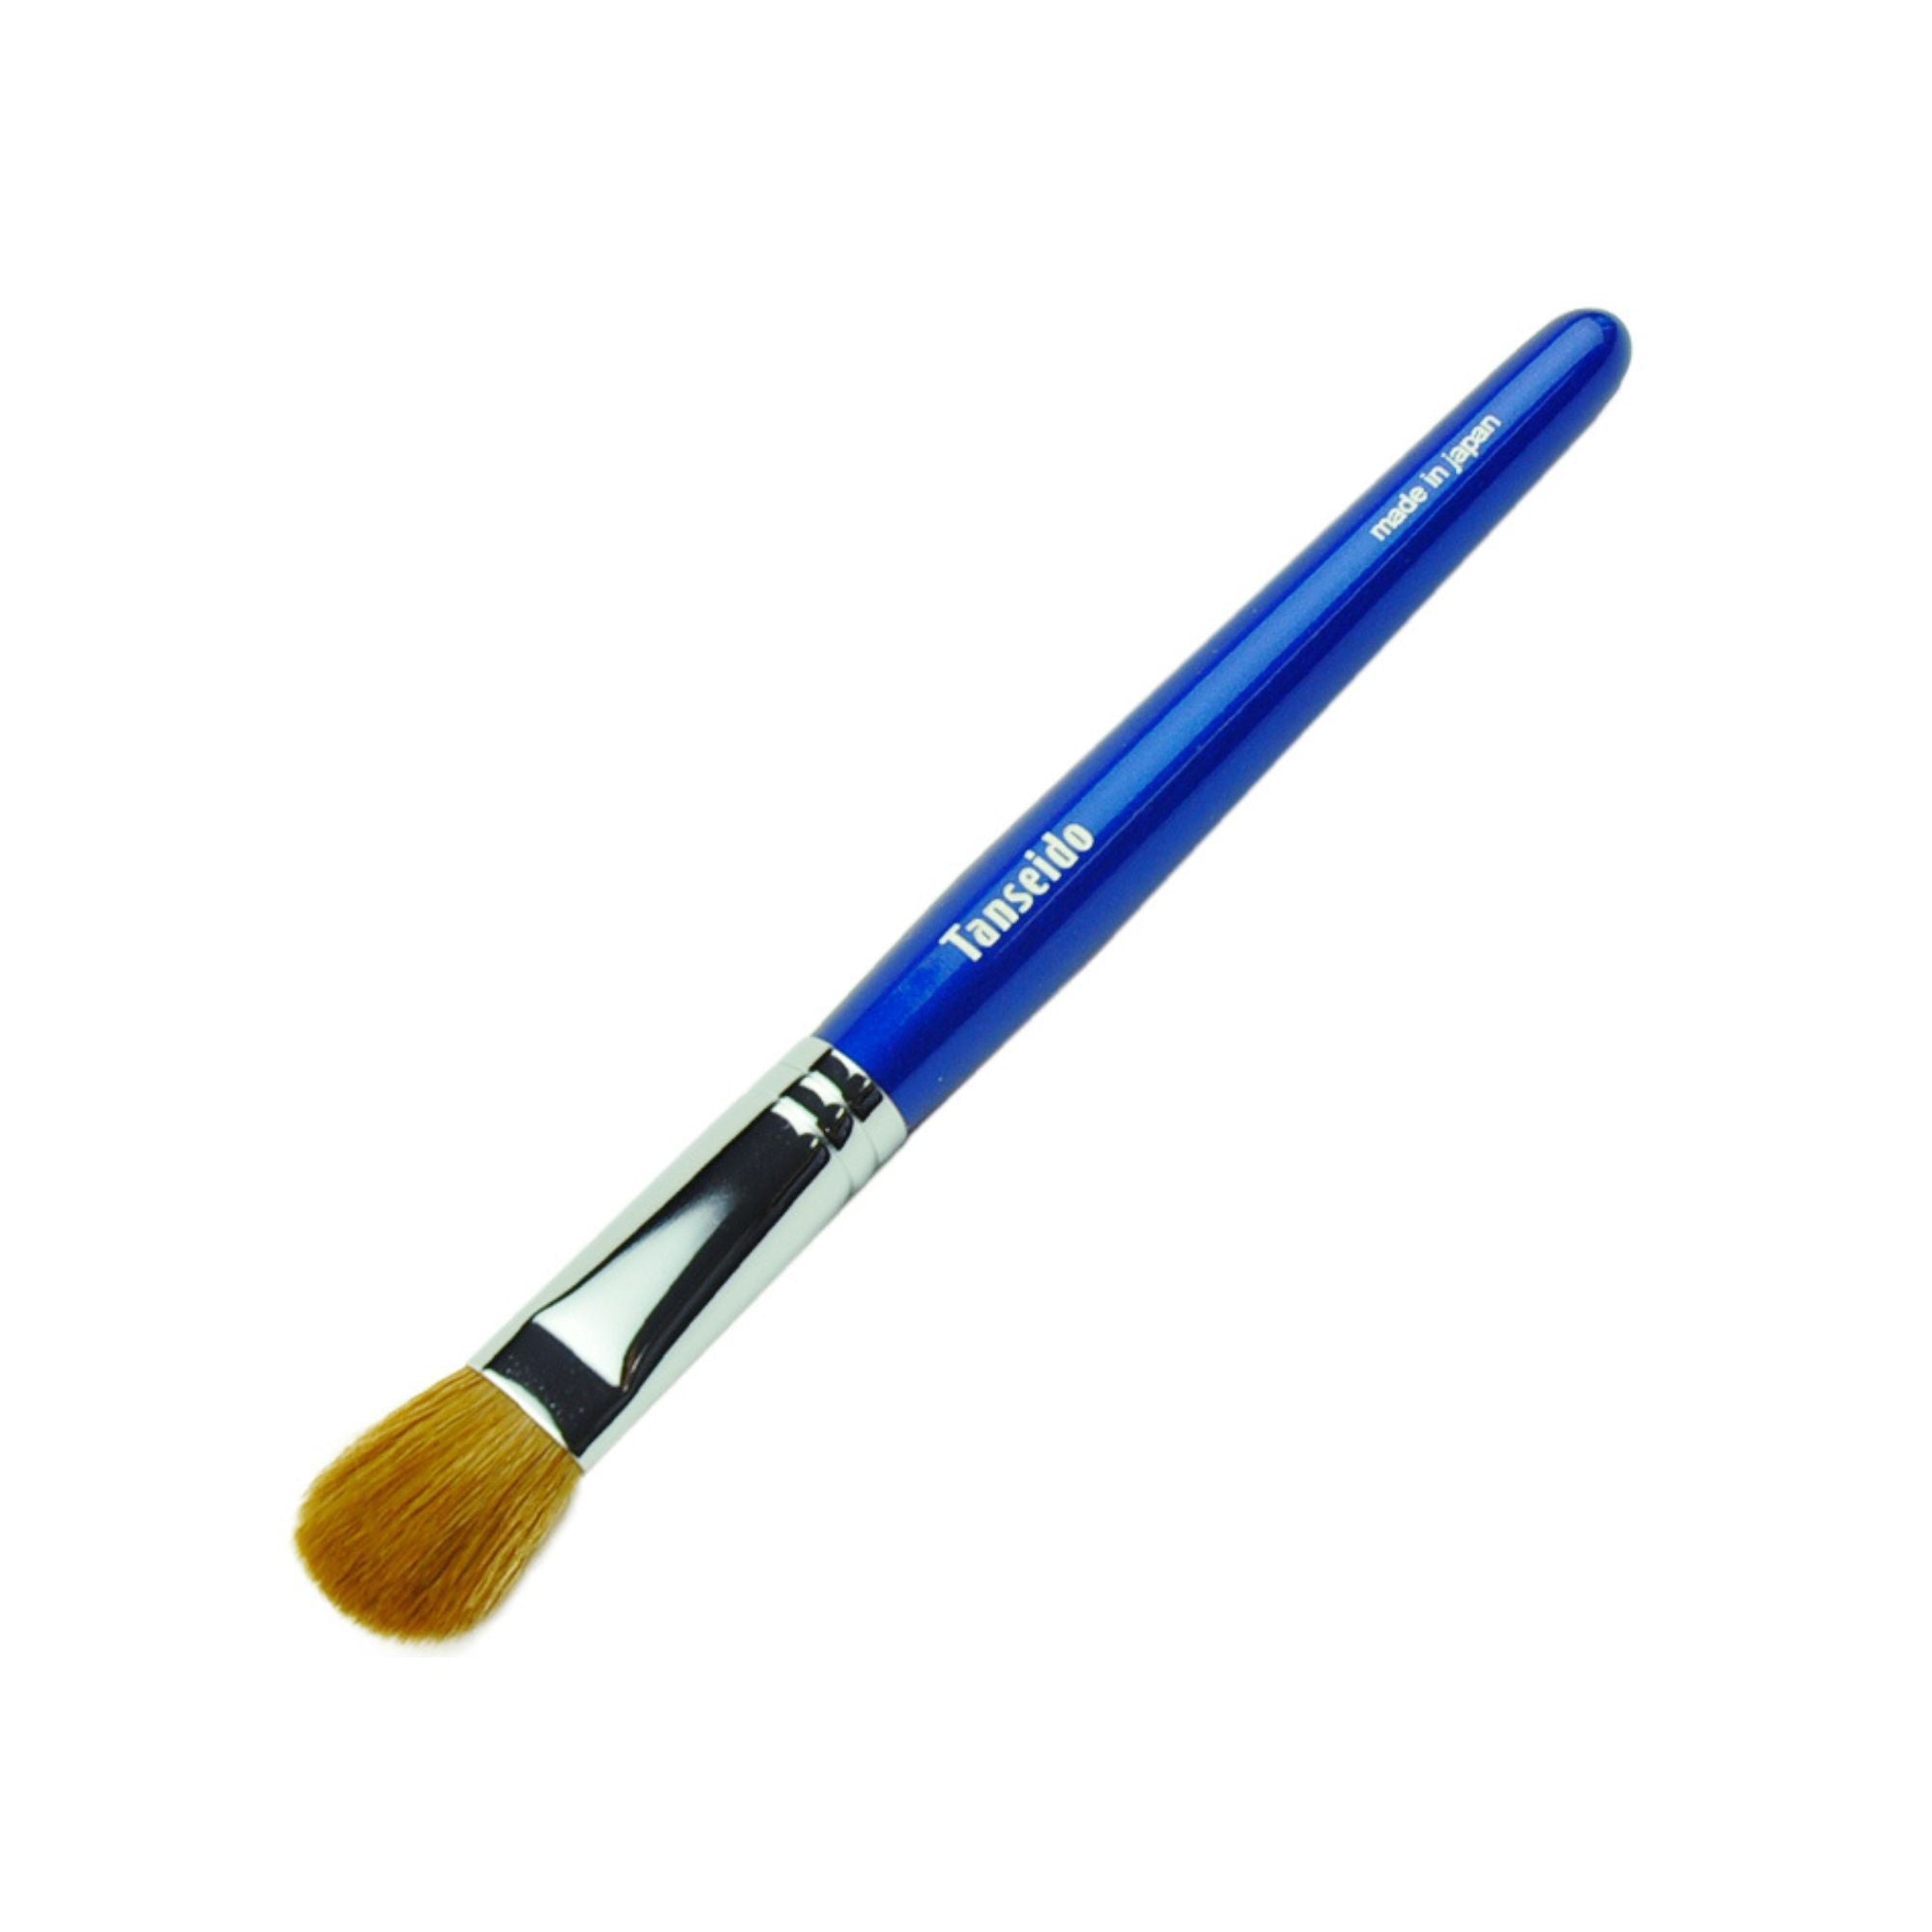 Tanseido Eyeshadow Brush WQ12T - Fude Beauty, Japanese Makeup Brushes